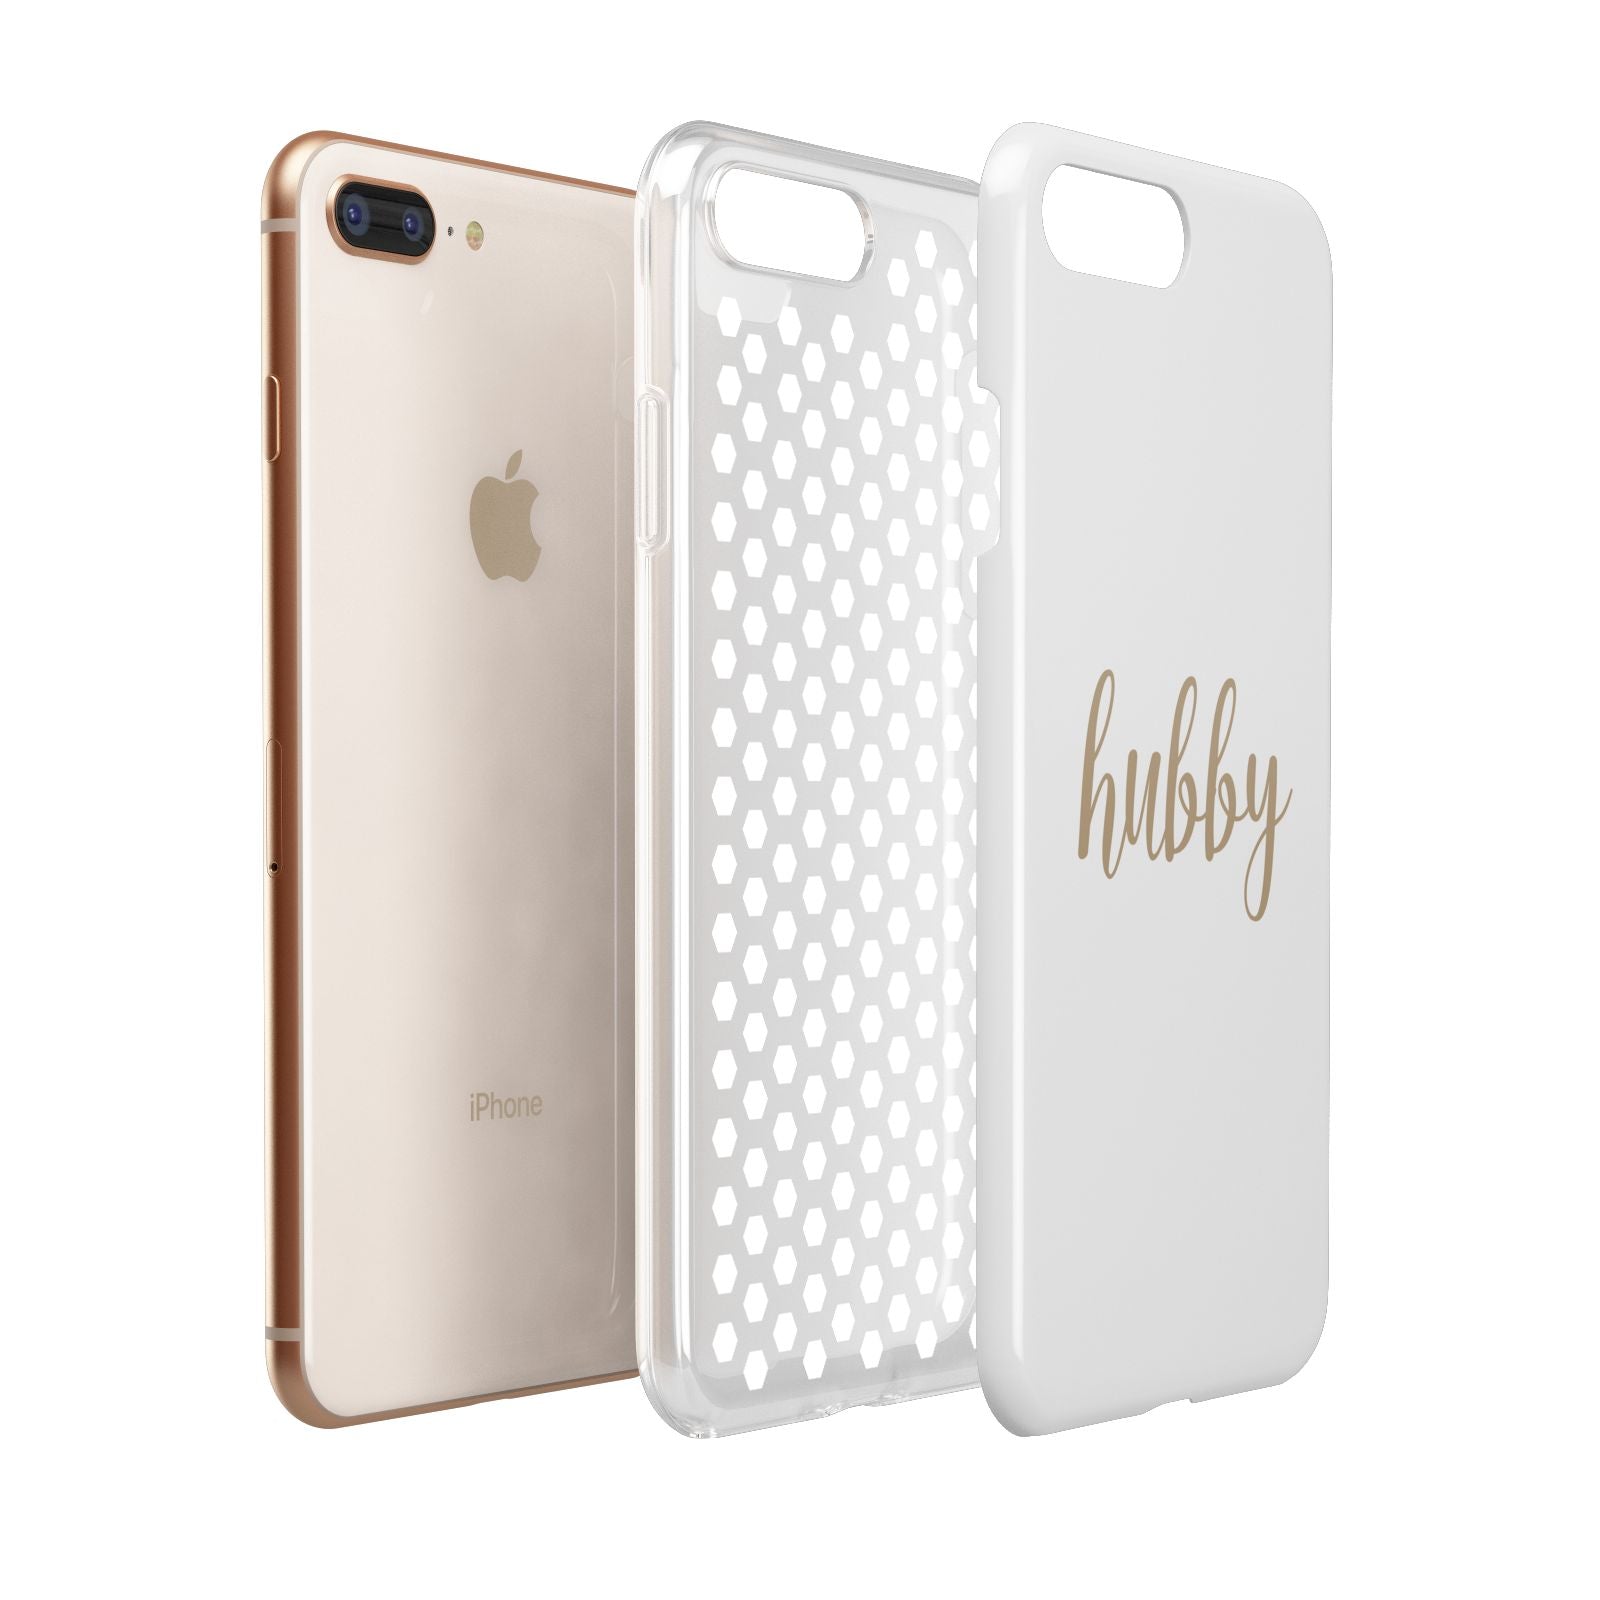 Hubby Apple iPhone 7 8 Plus 3D Tough Case Expanded View